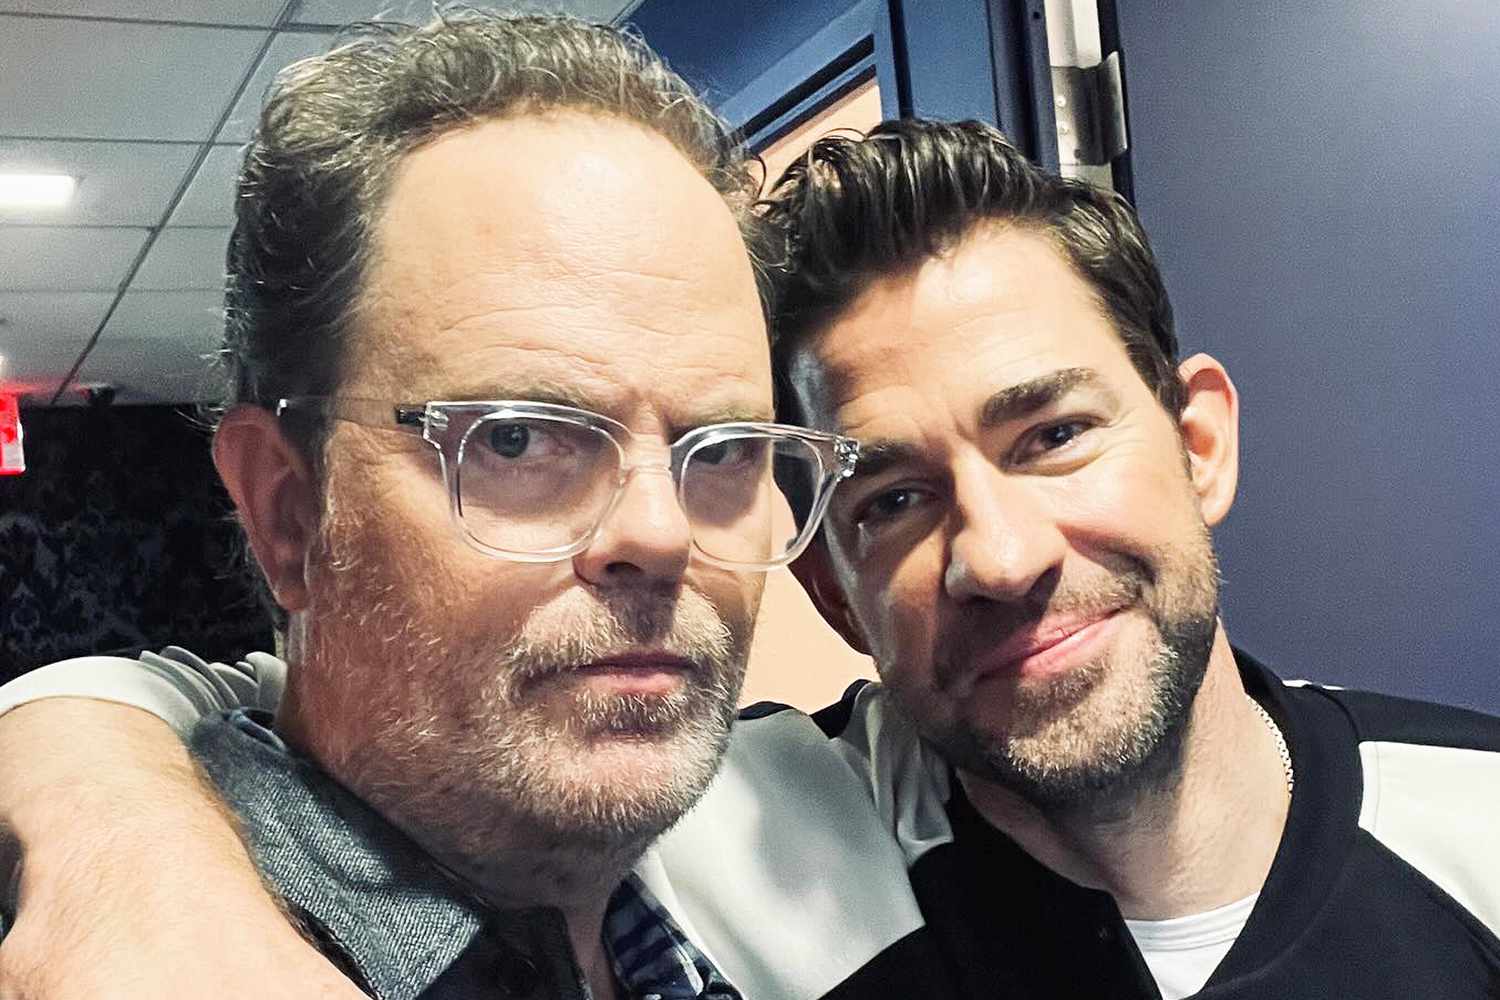 Rainn Wilson Calls John Krasinski His 'Incredibly Talented, Big-Hearted Brother' as “The Office” Costars Reunite